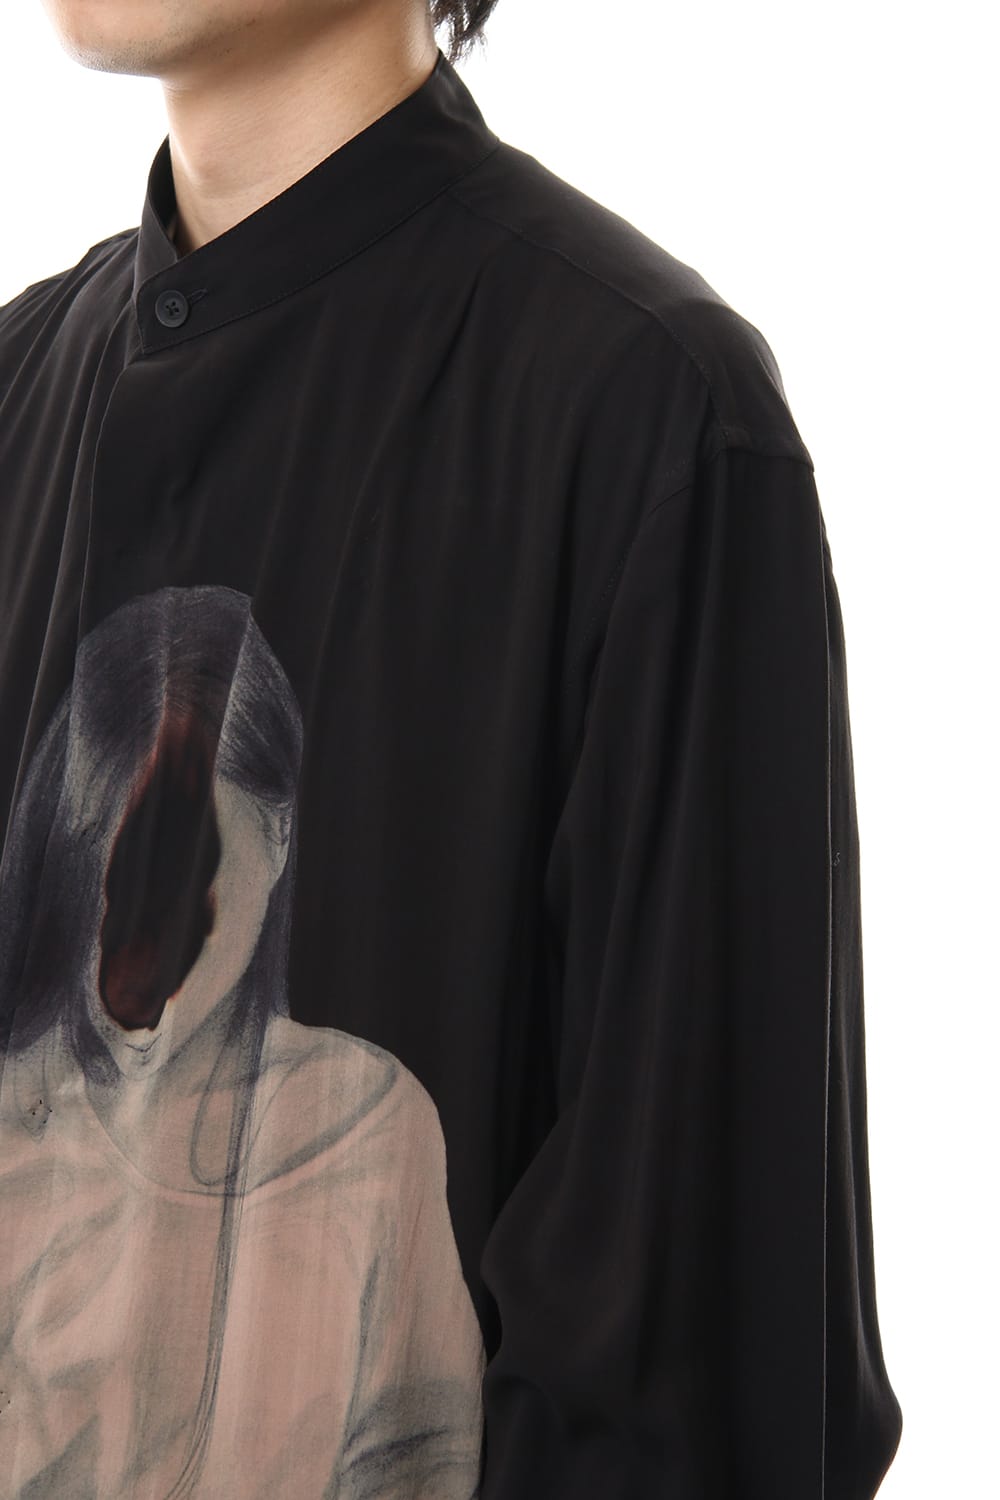 hn-b49-231 | UCHIDA Print York long shirt | Yohji Yamamoto | 通販 